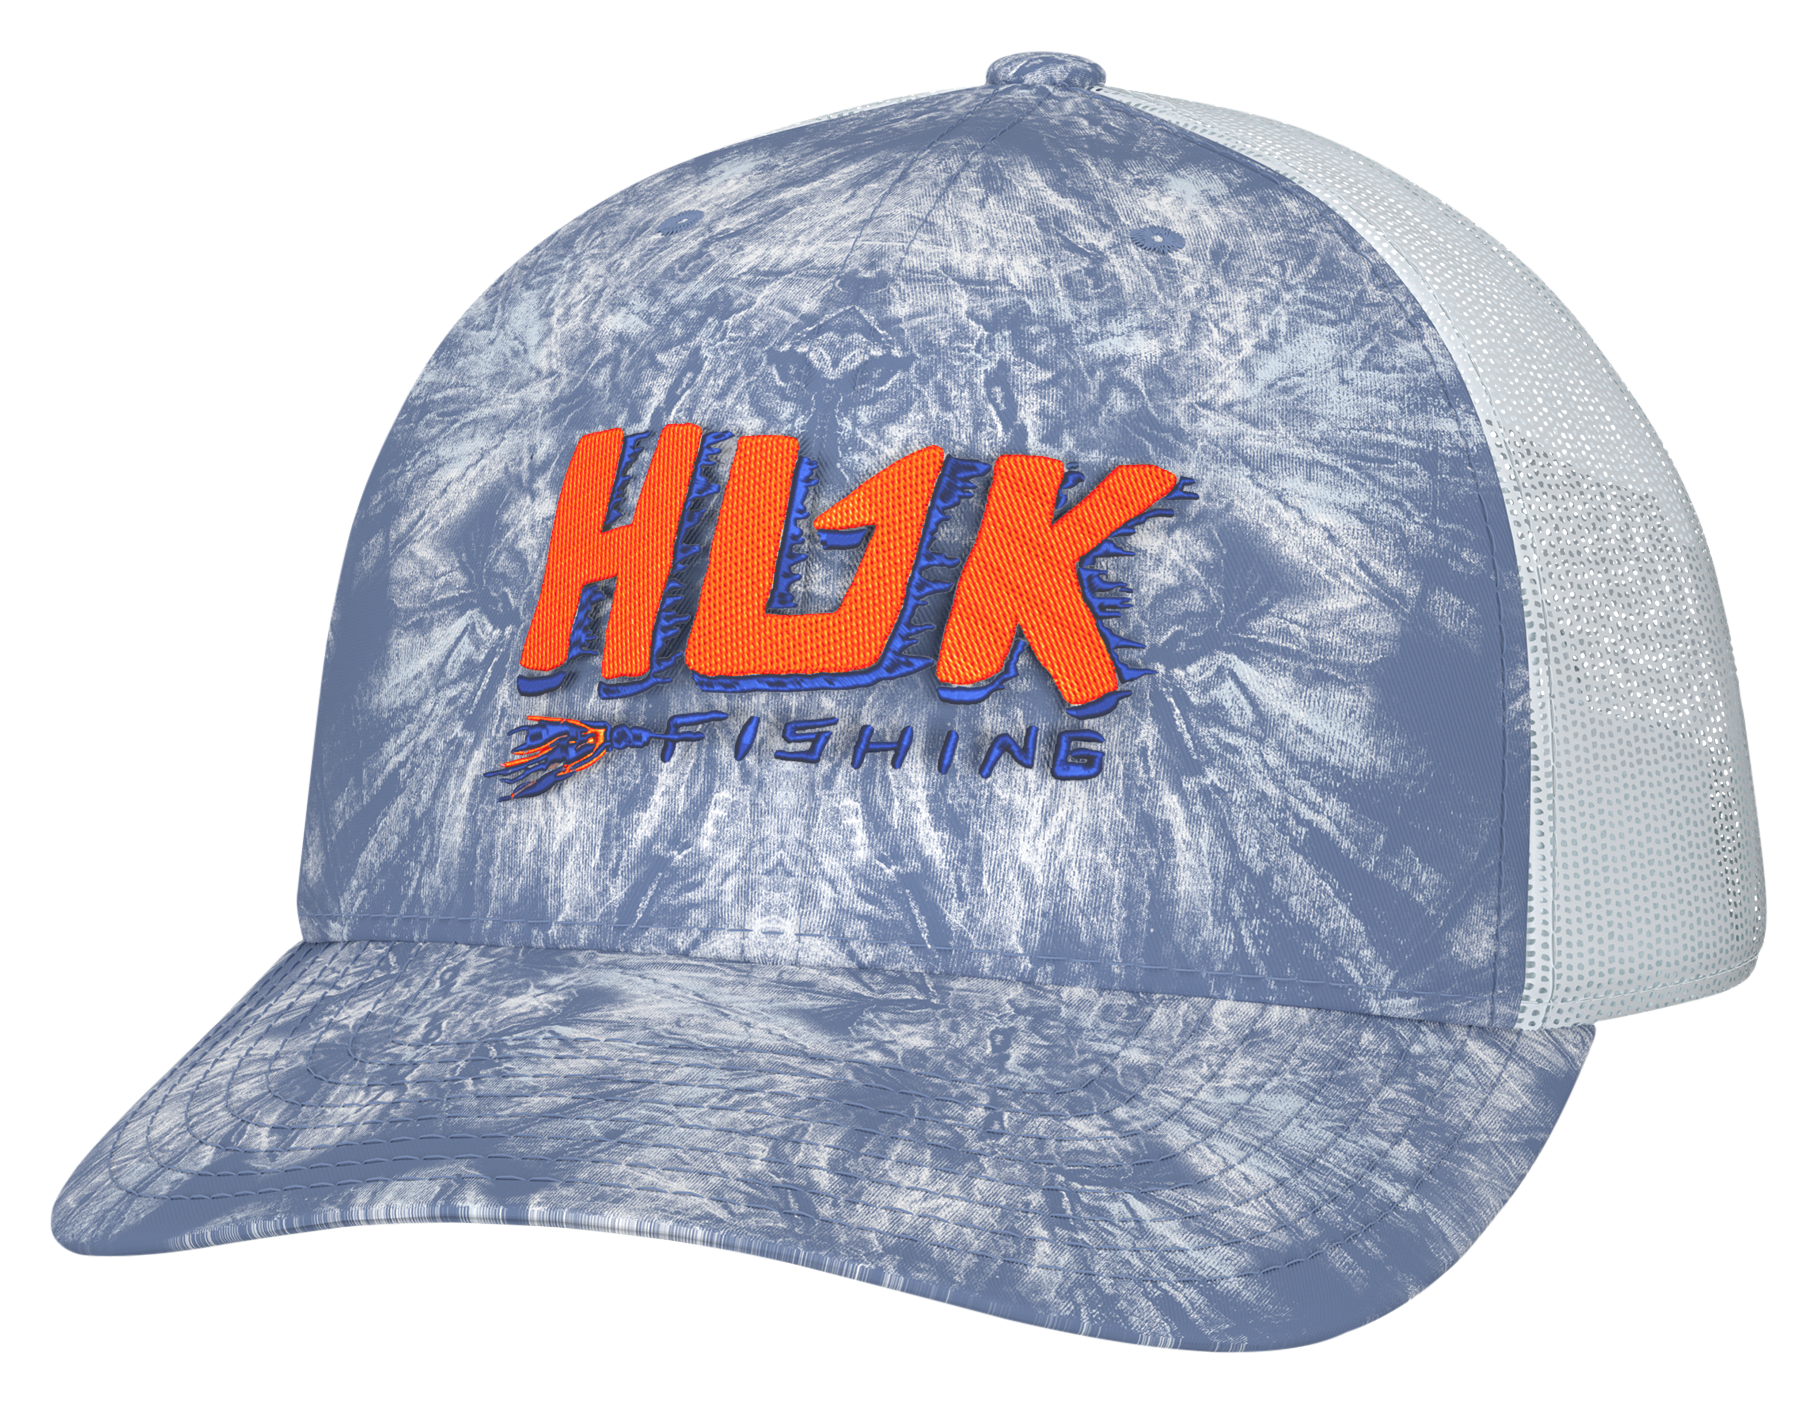 HUK Kids' Trucker Fishing Hat, Sharkskin, 1 